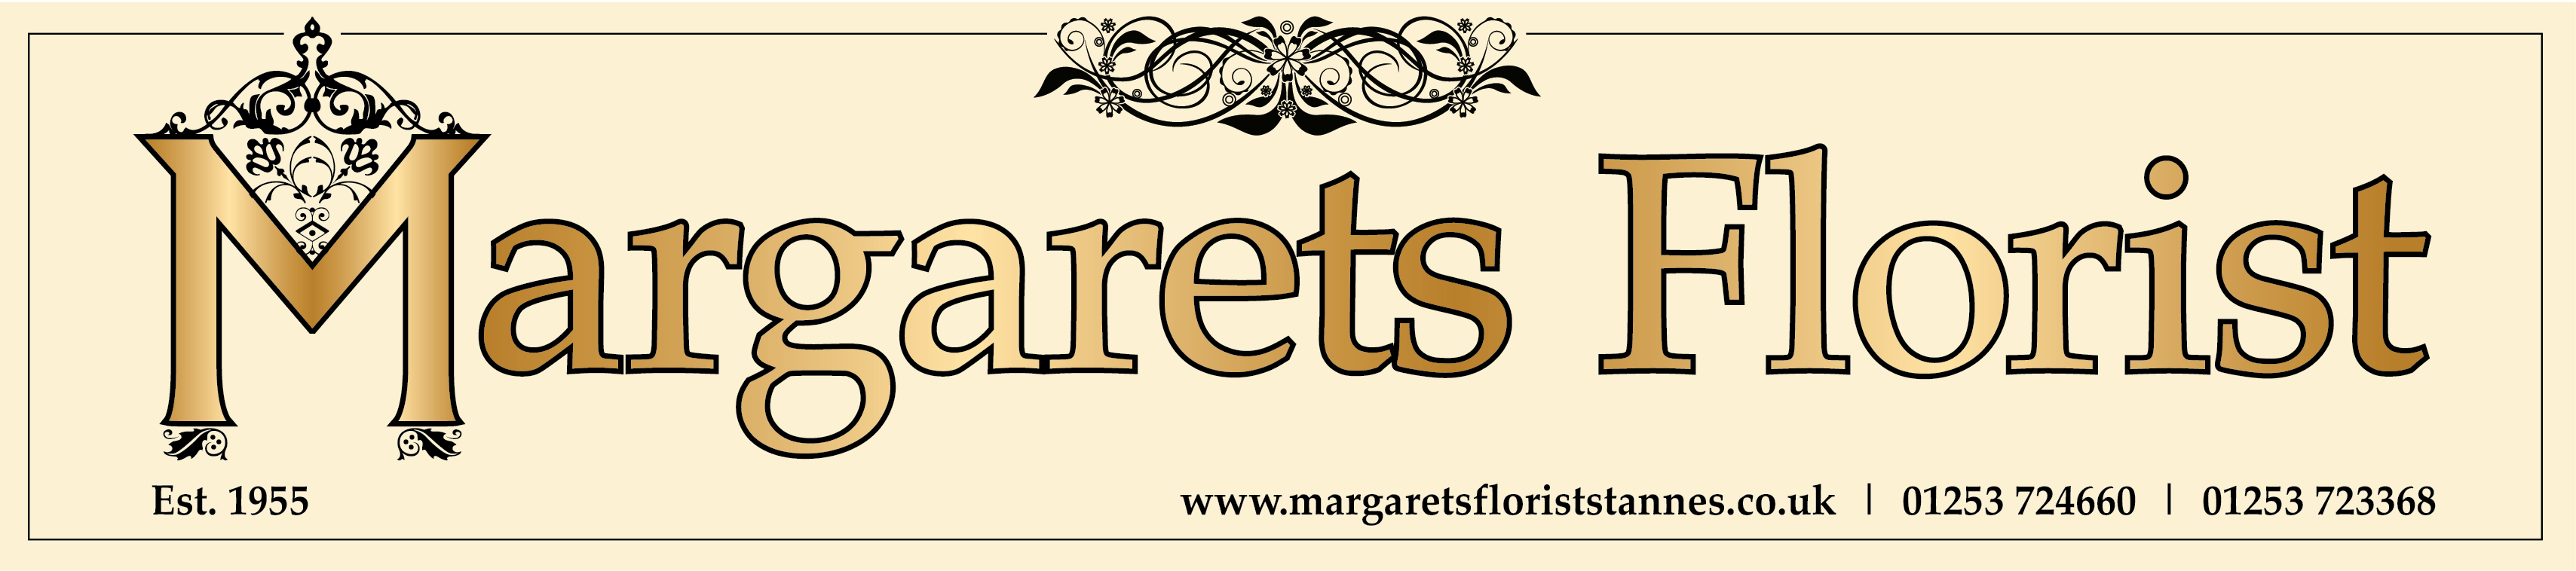 Margaret's Florist - Logo